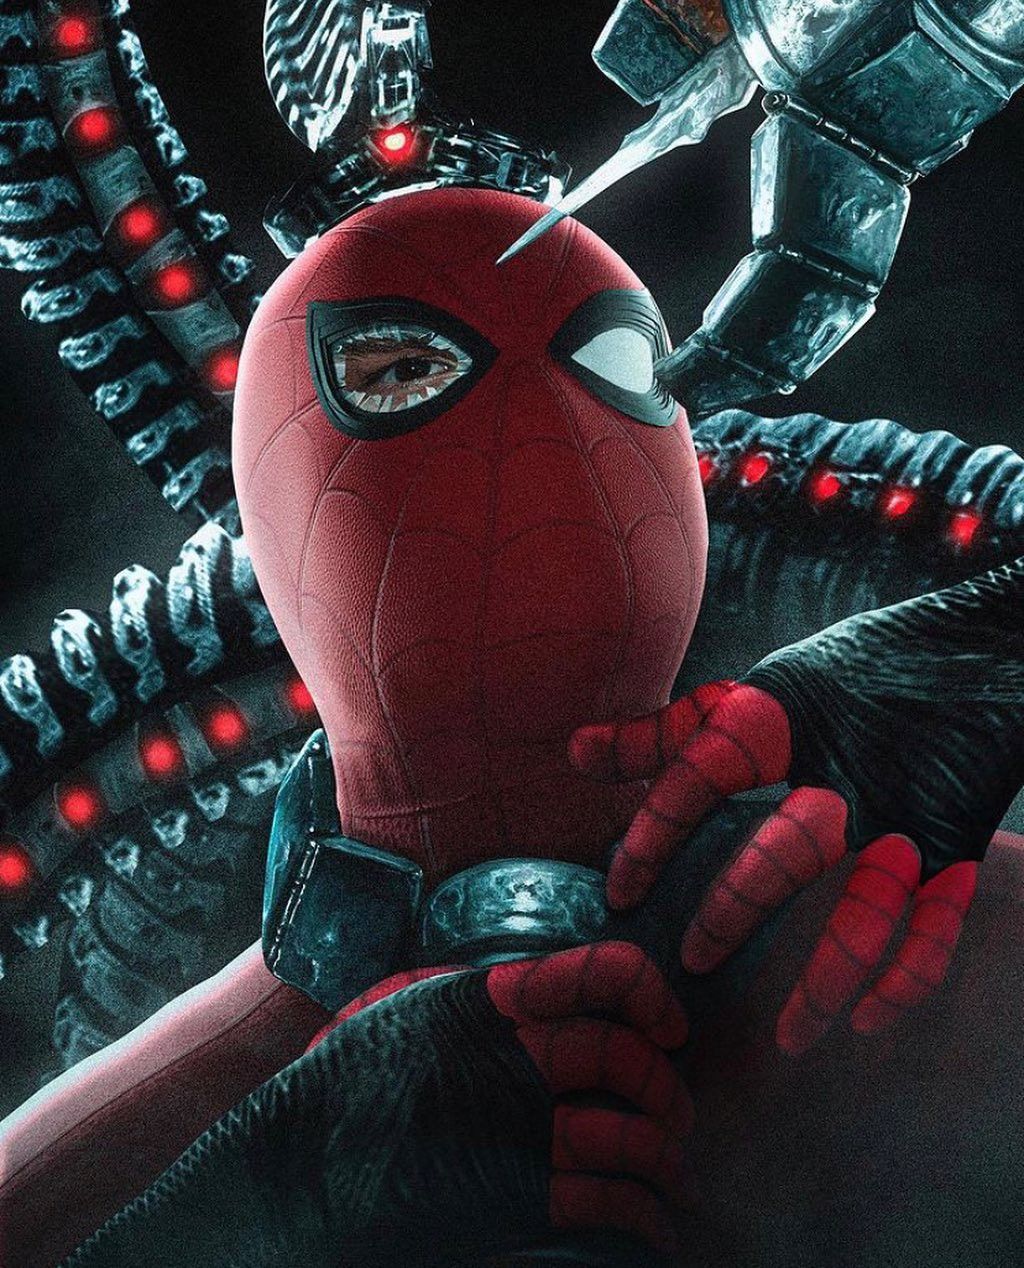 20+] Spider-Man Vs Doctor Octopus Wallpapers - WallpaperSafari